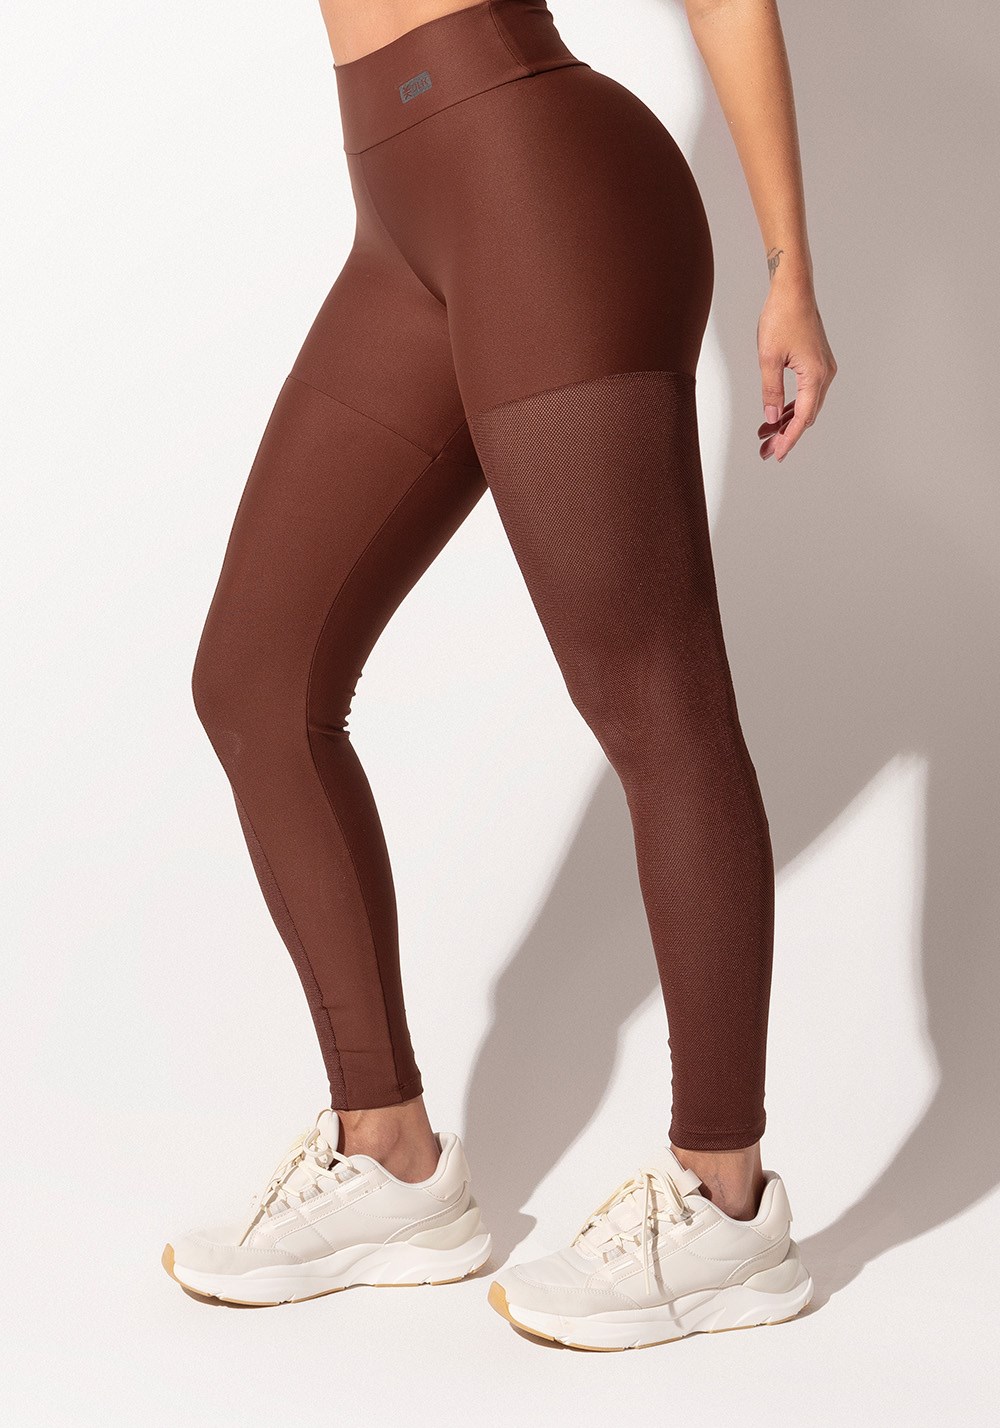 Legging fitness feminina marrom com recorte lateral em tela intense